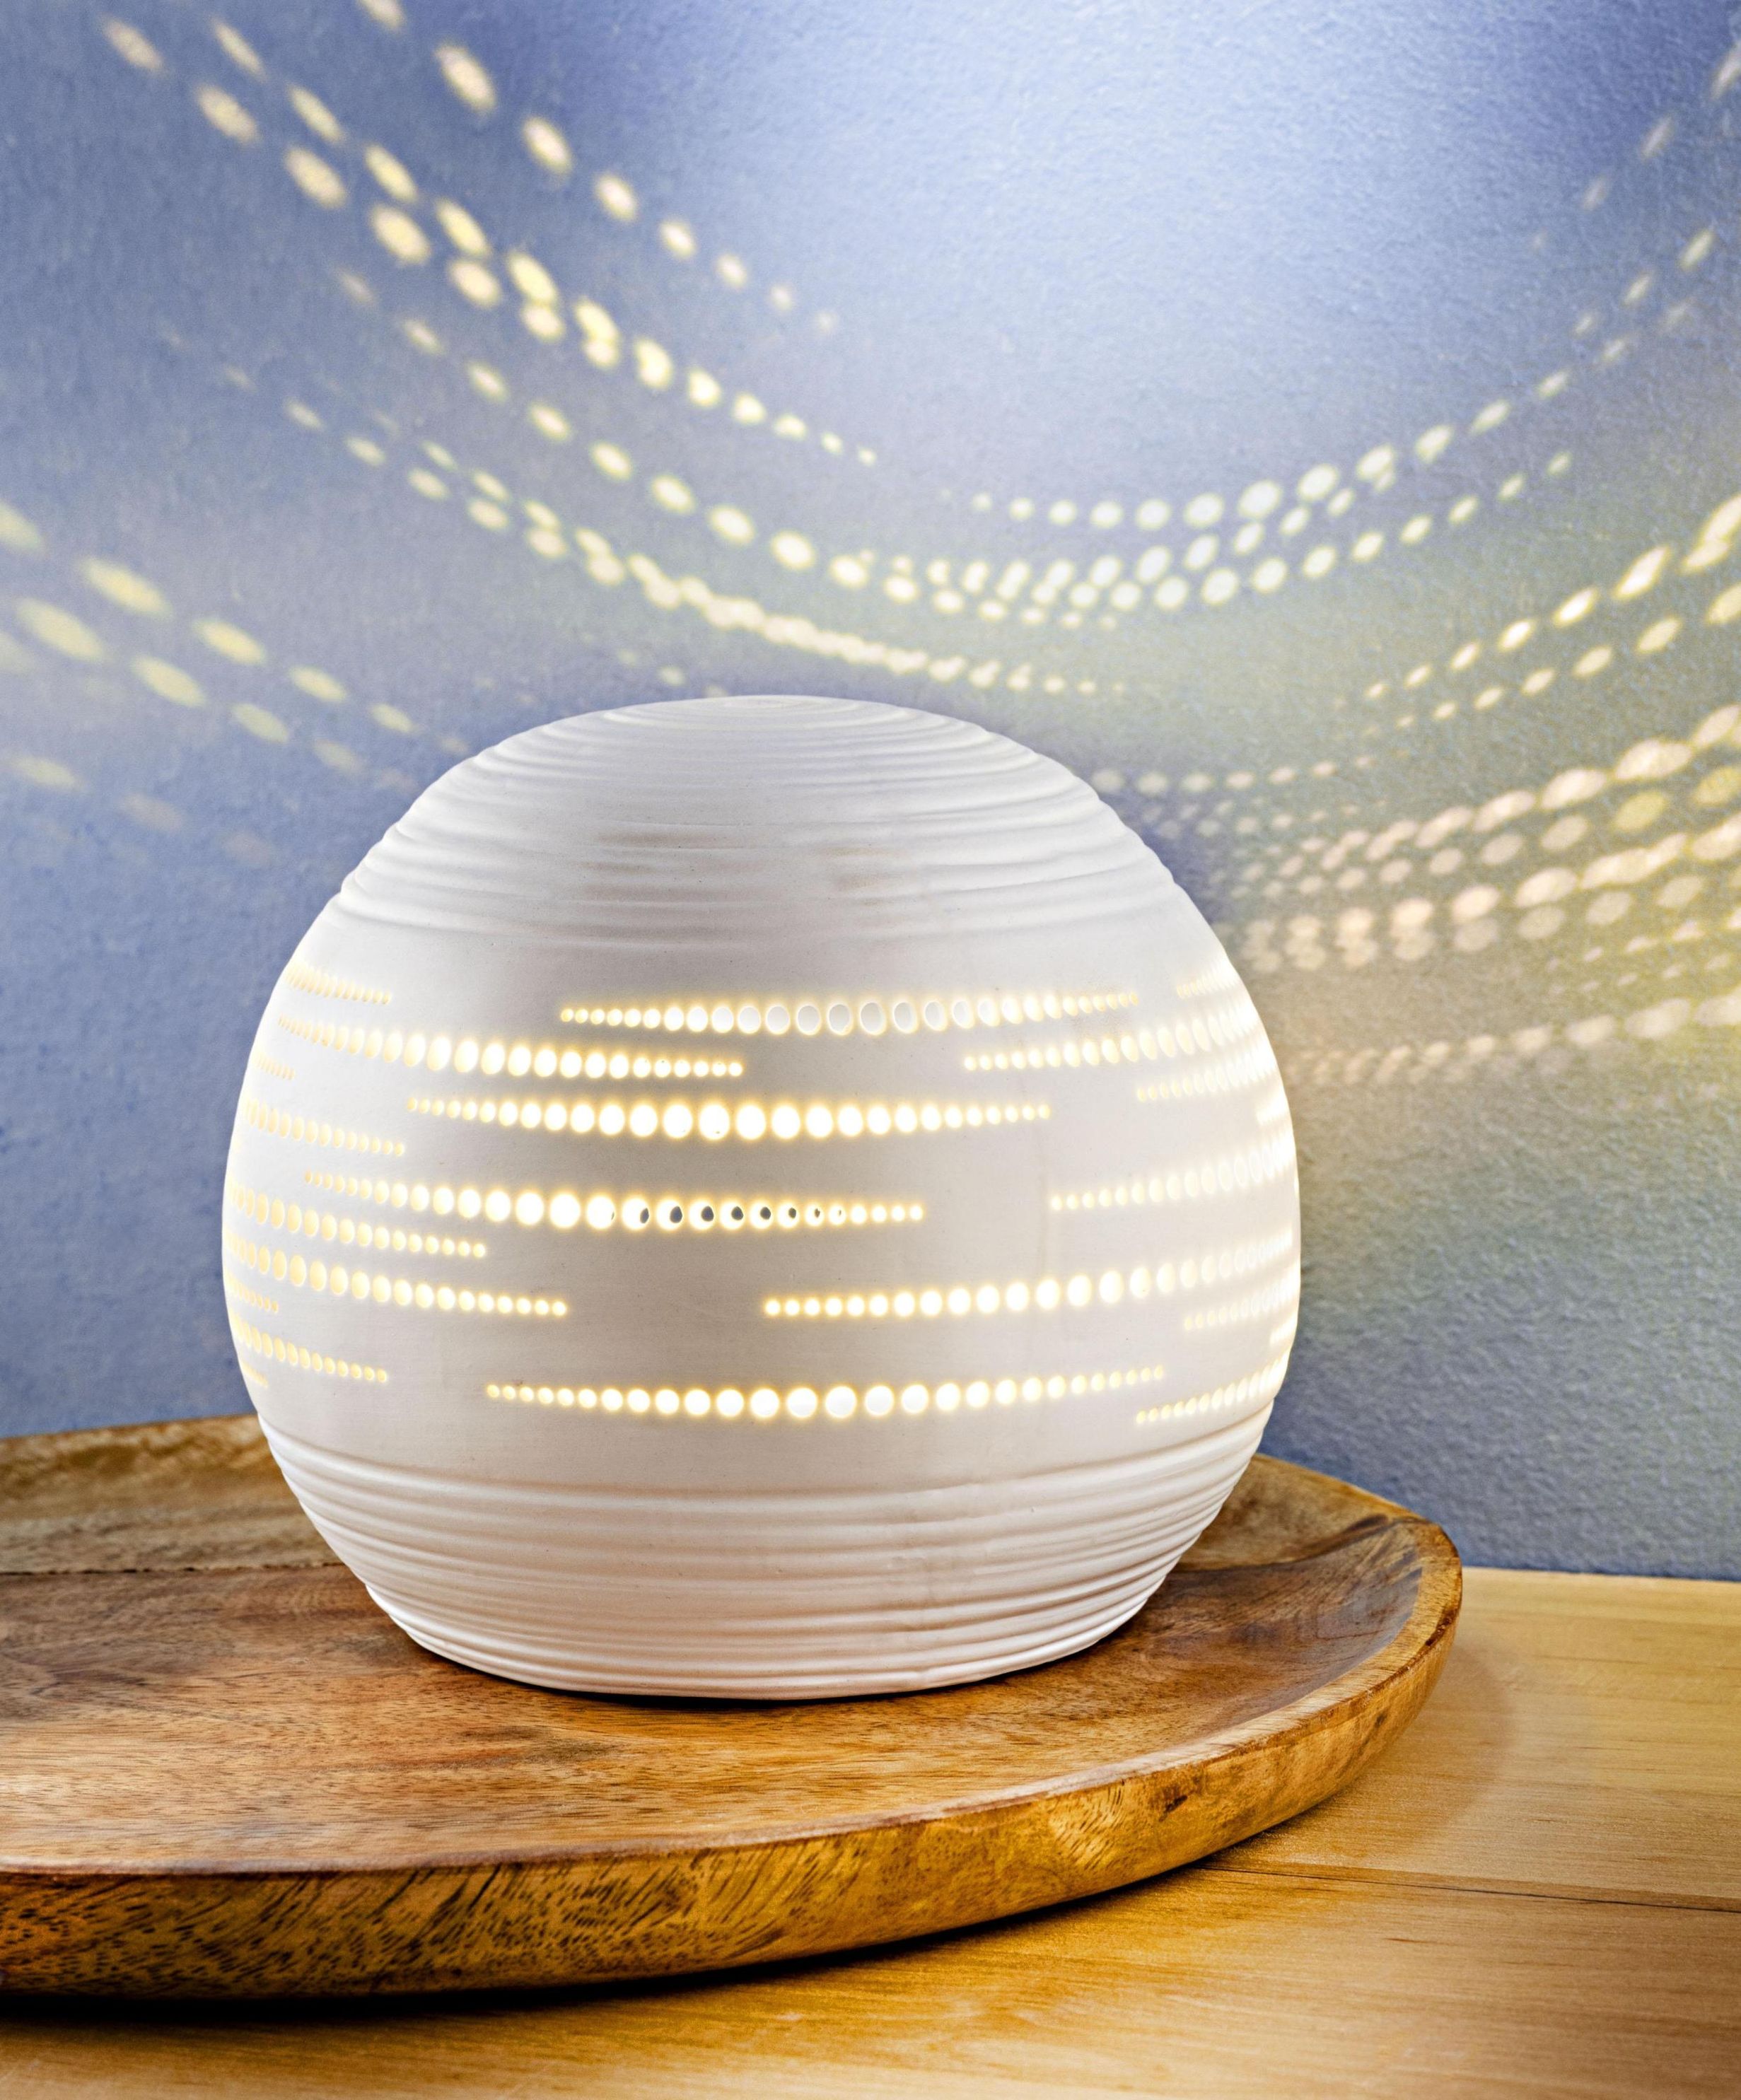 LED-Porzellanleuchte Bianco jetzt bei Weltbild.de bestellen